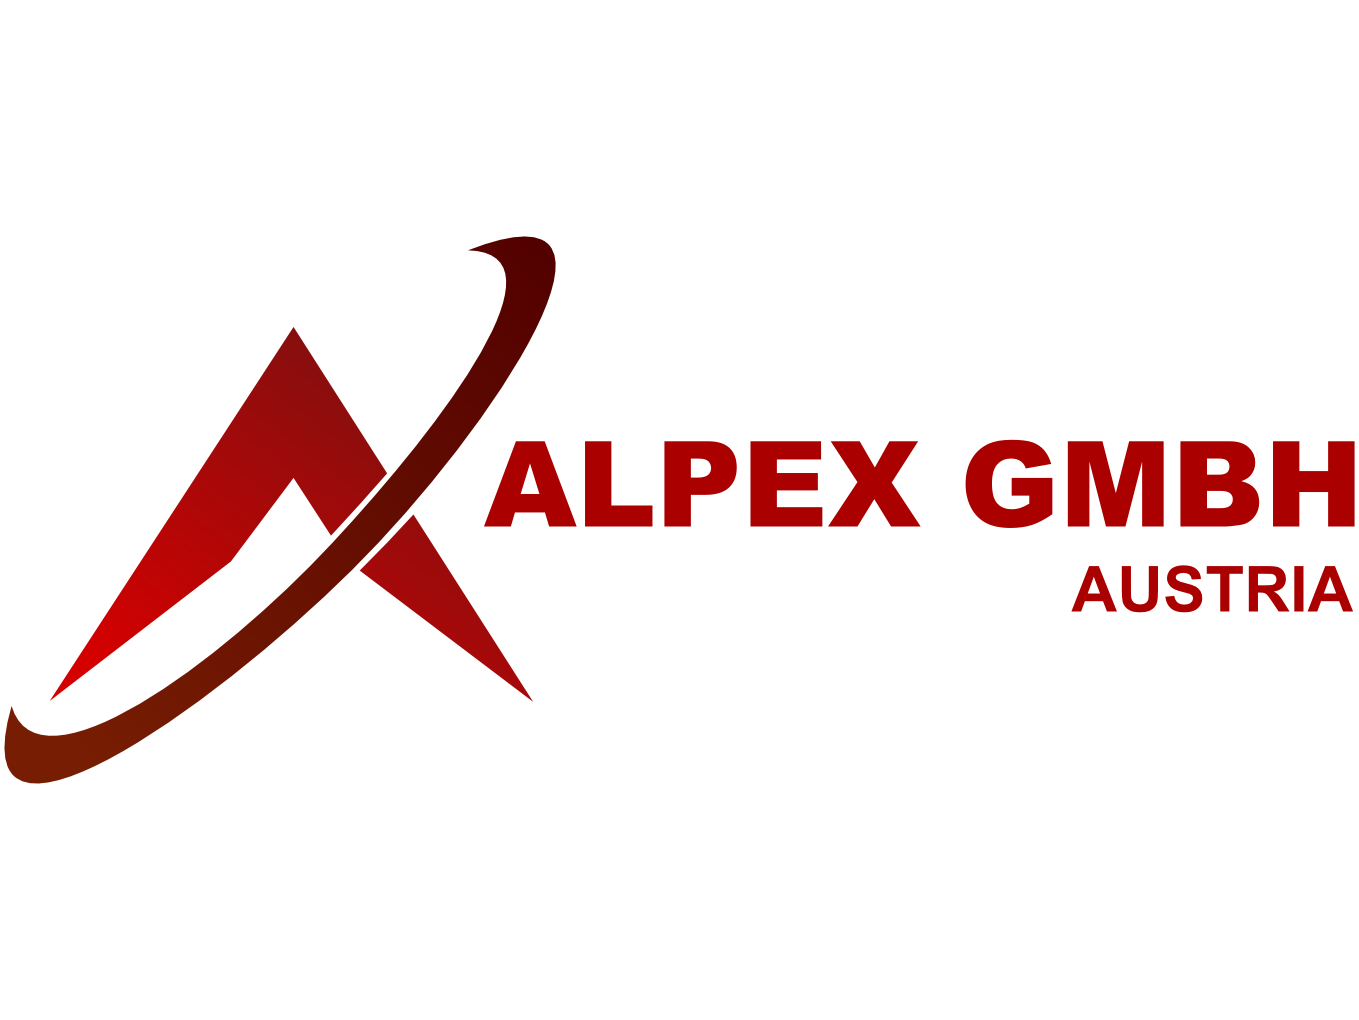 Alpex Logo